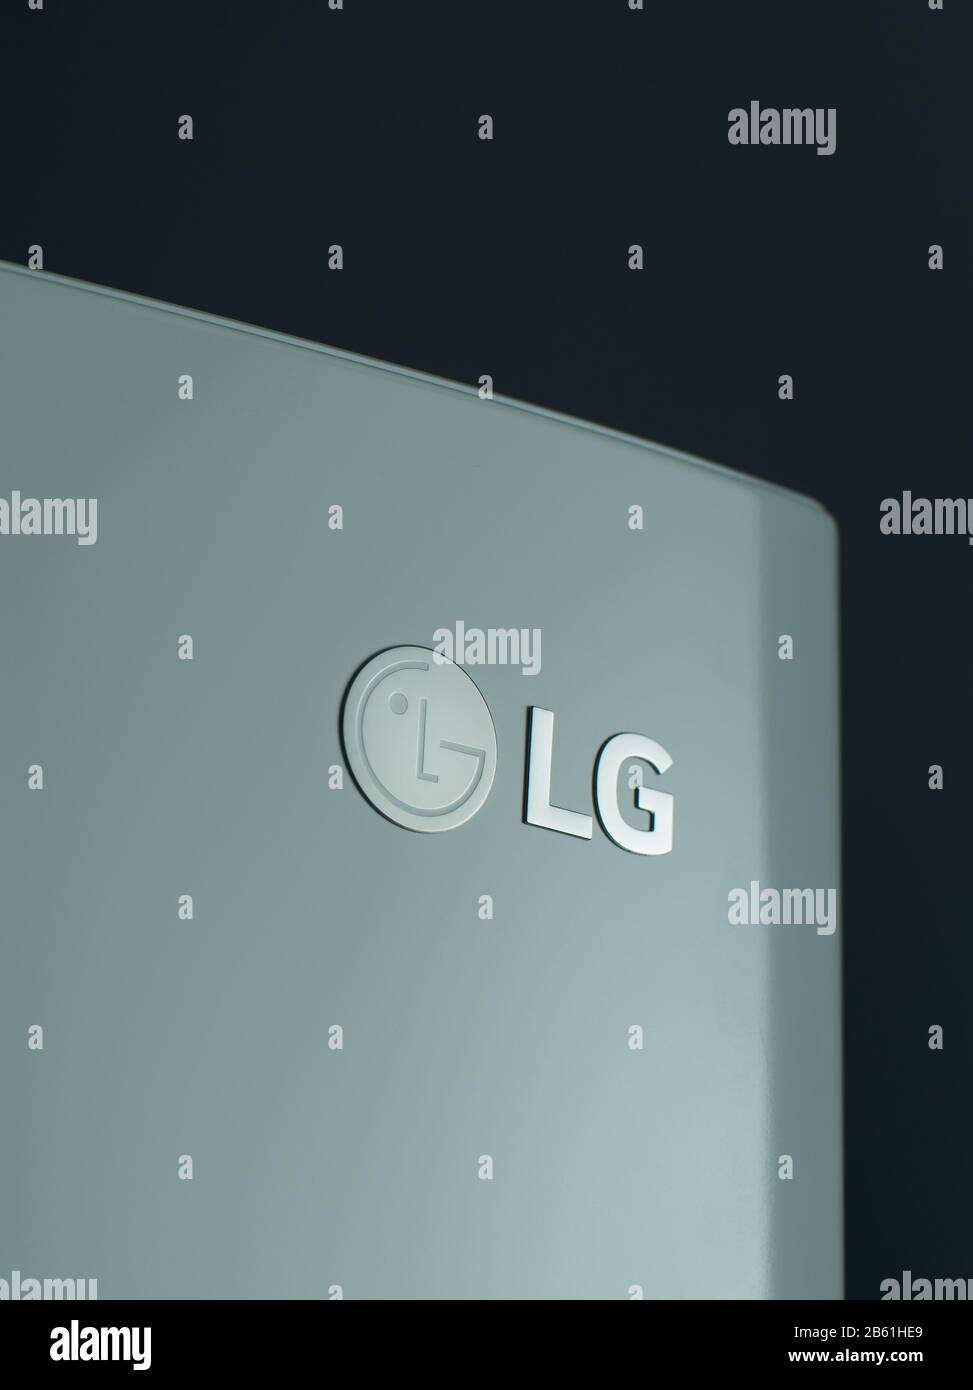 LG corp logo on the freezer Stock Photo